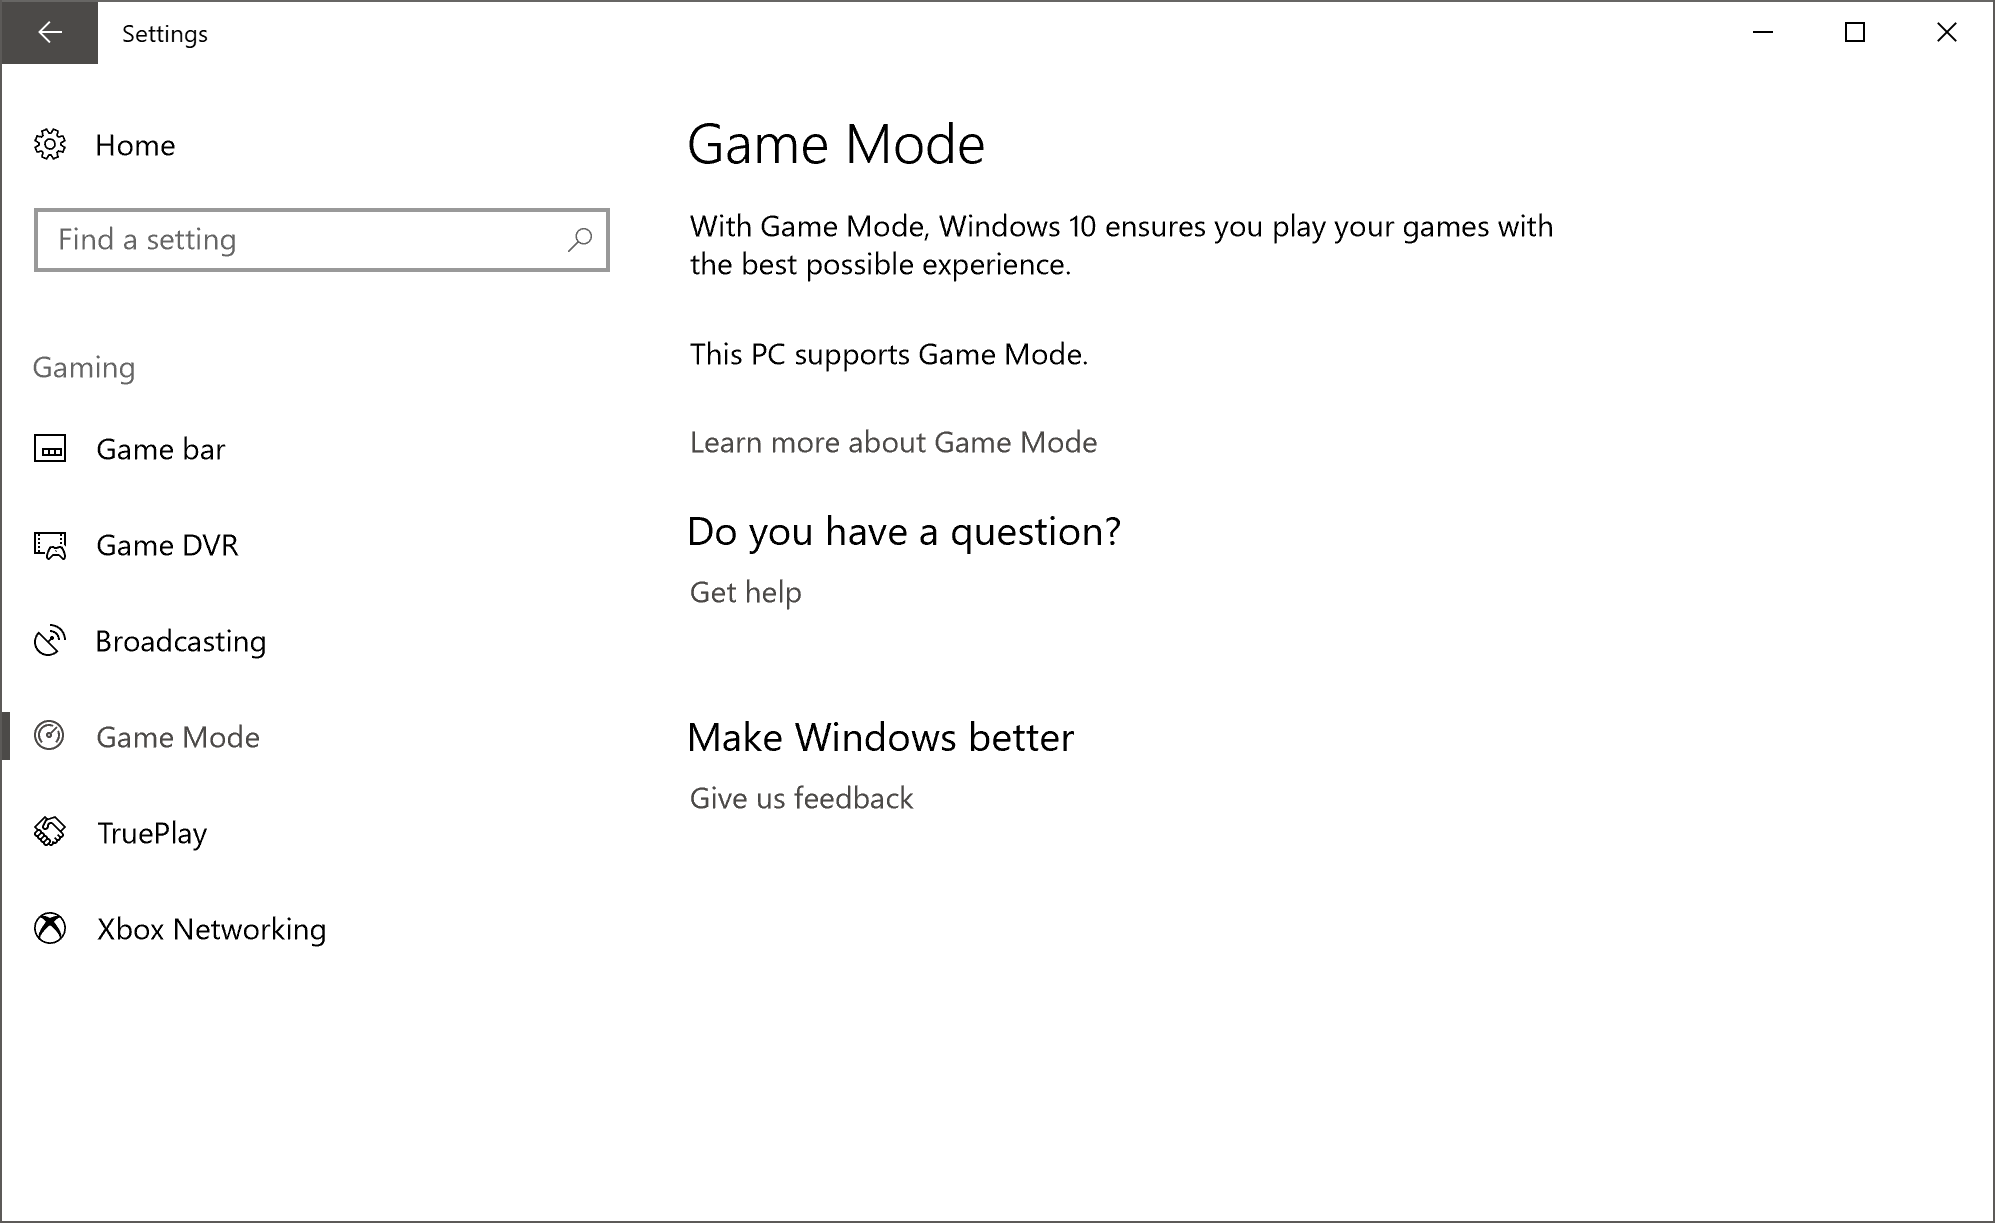 How “Game Mode” will make games run better on Windows